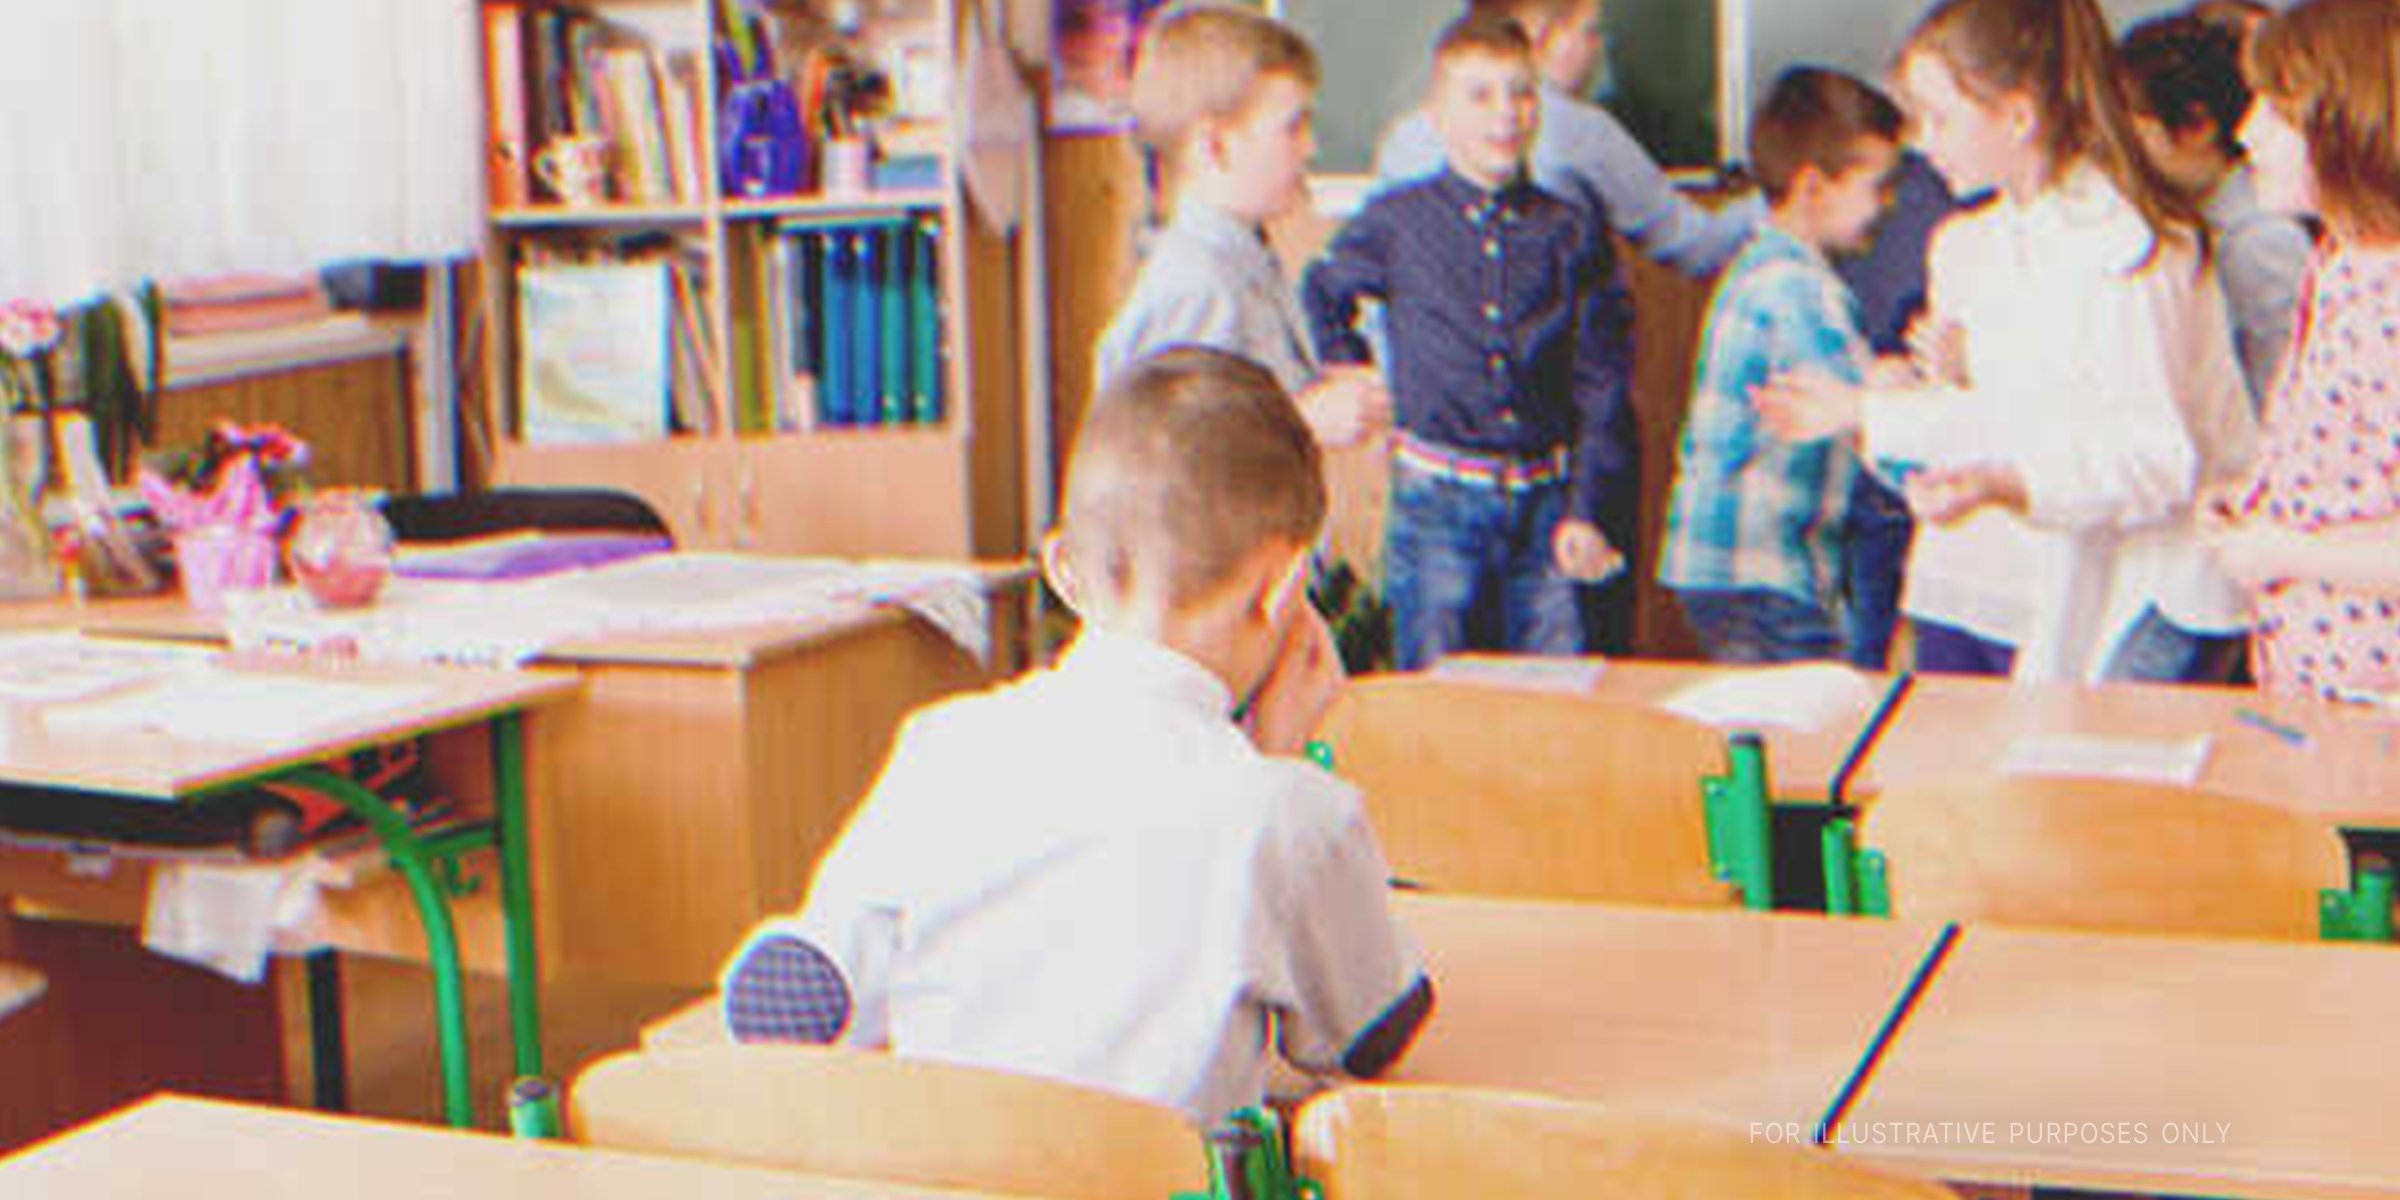 Sad boy in a classroom | Source: Shutterstock